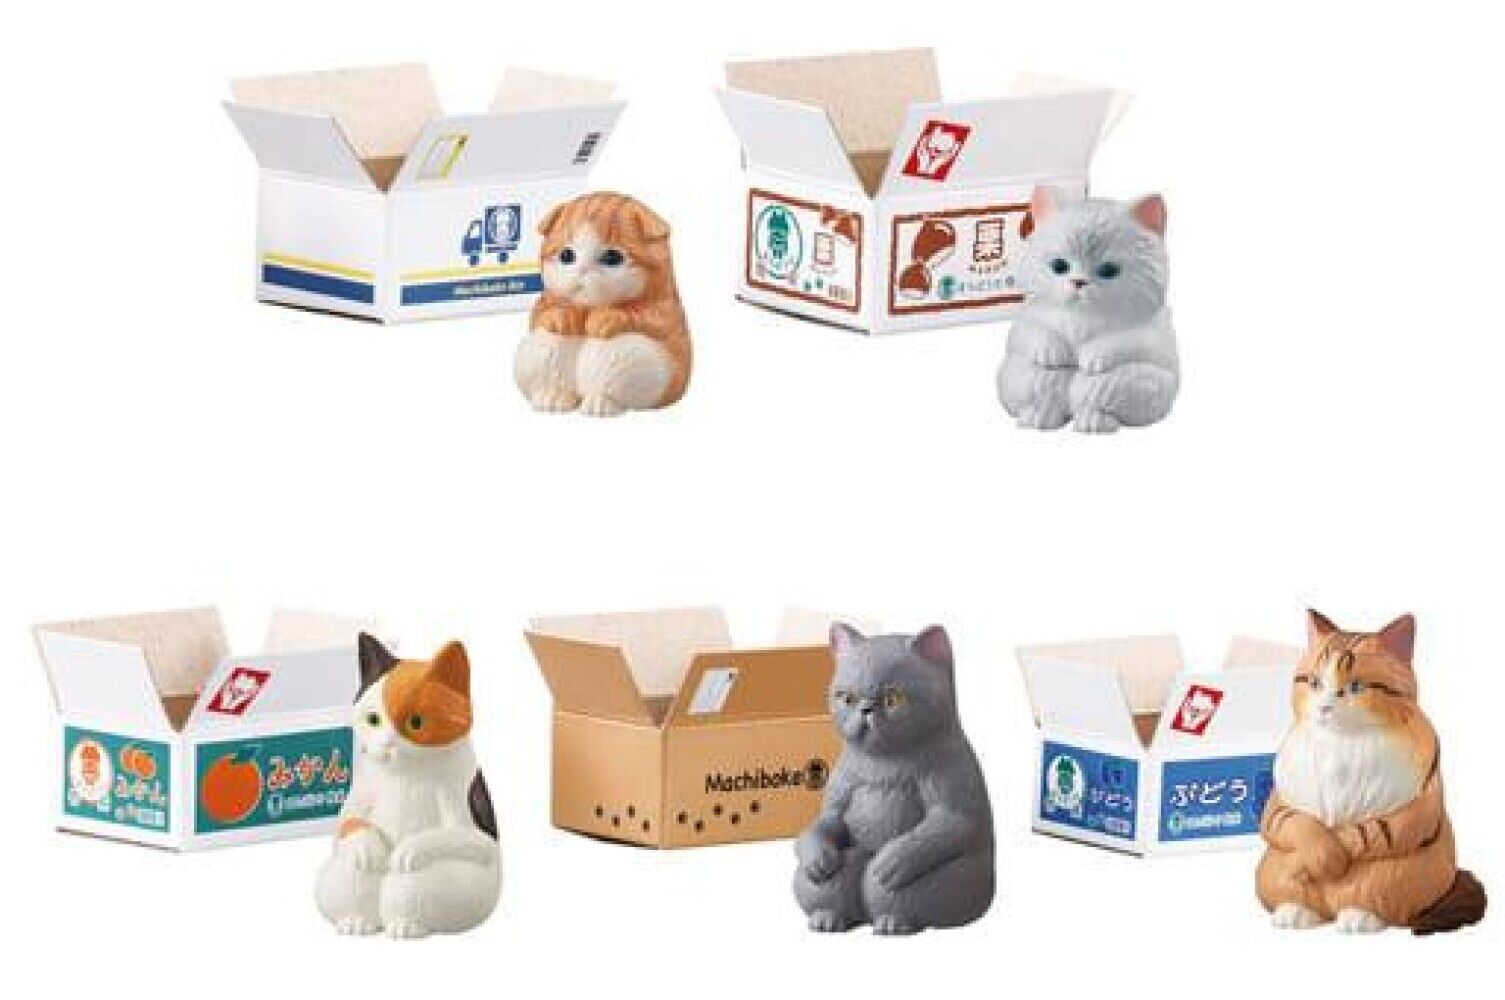 Machiboke Neko 1 5 Sets Complete Cats Mini Figures Gashapon Bandai Japan New